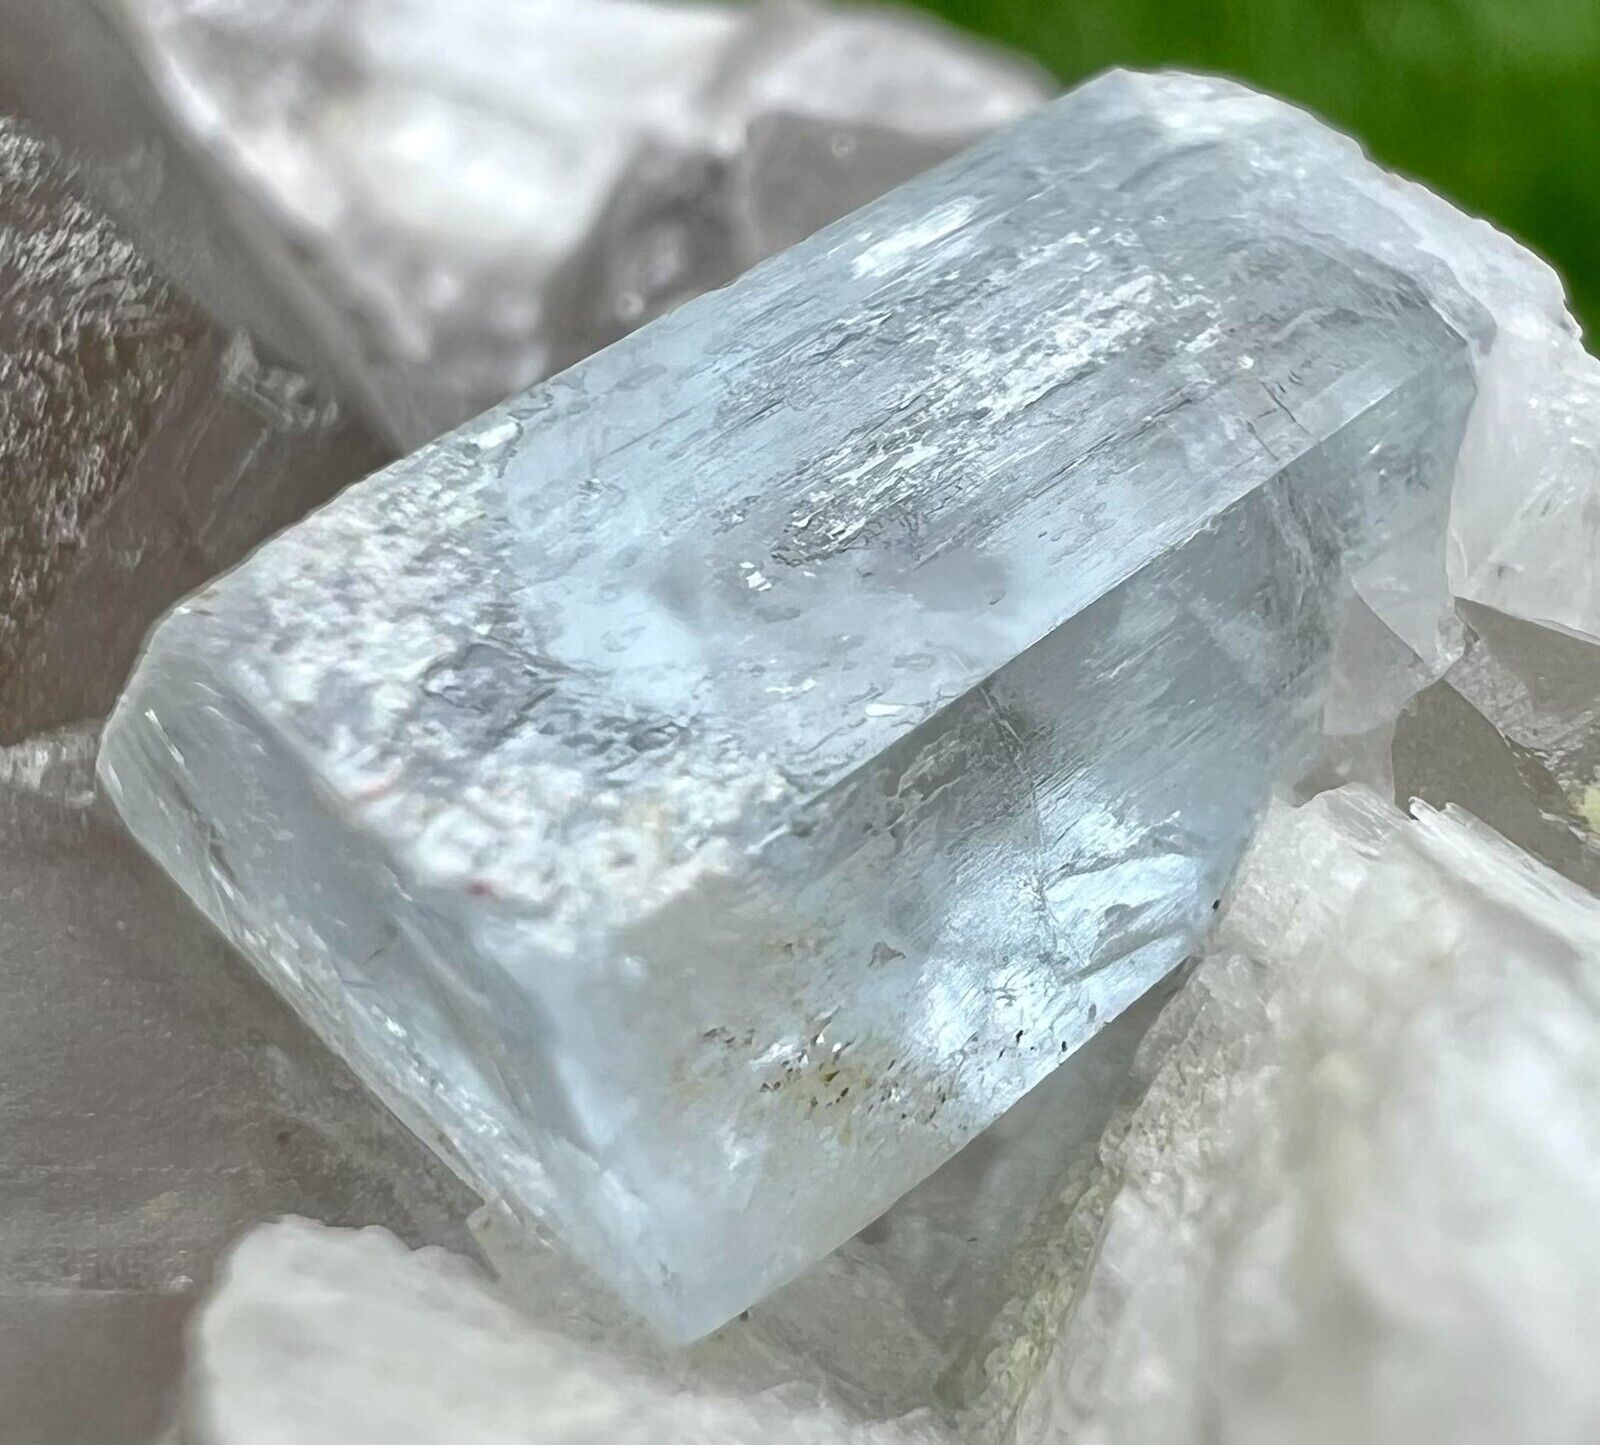 378 Carat Unusual Aquamarine Gemmy Crystal With Quartz On Matrix From Pakistan